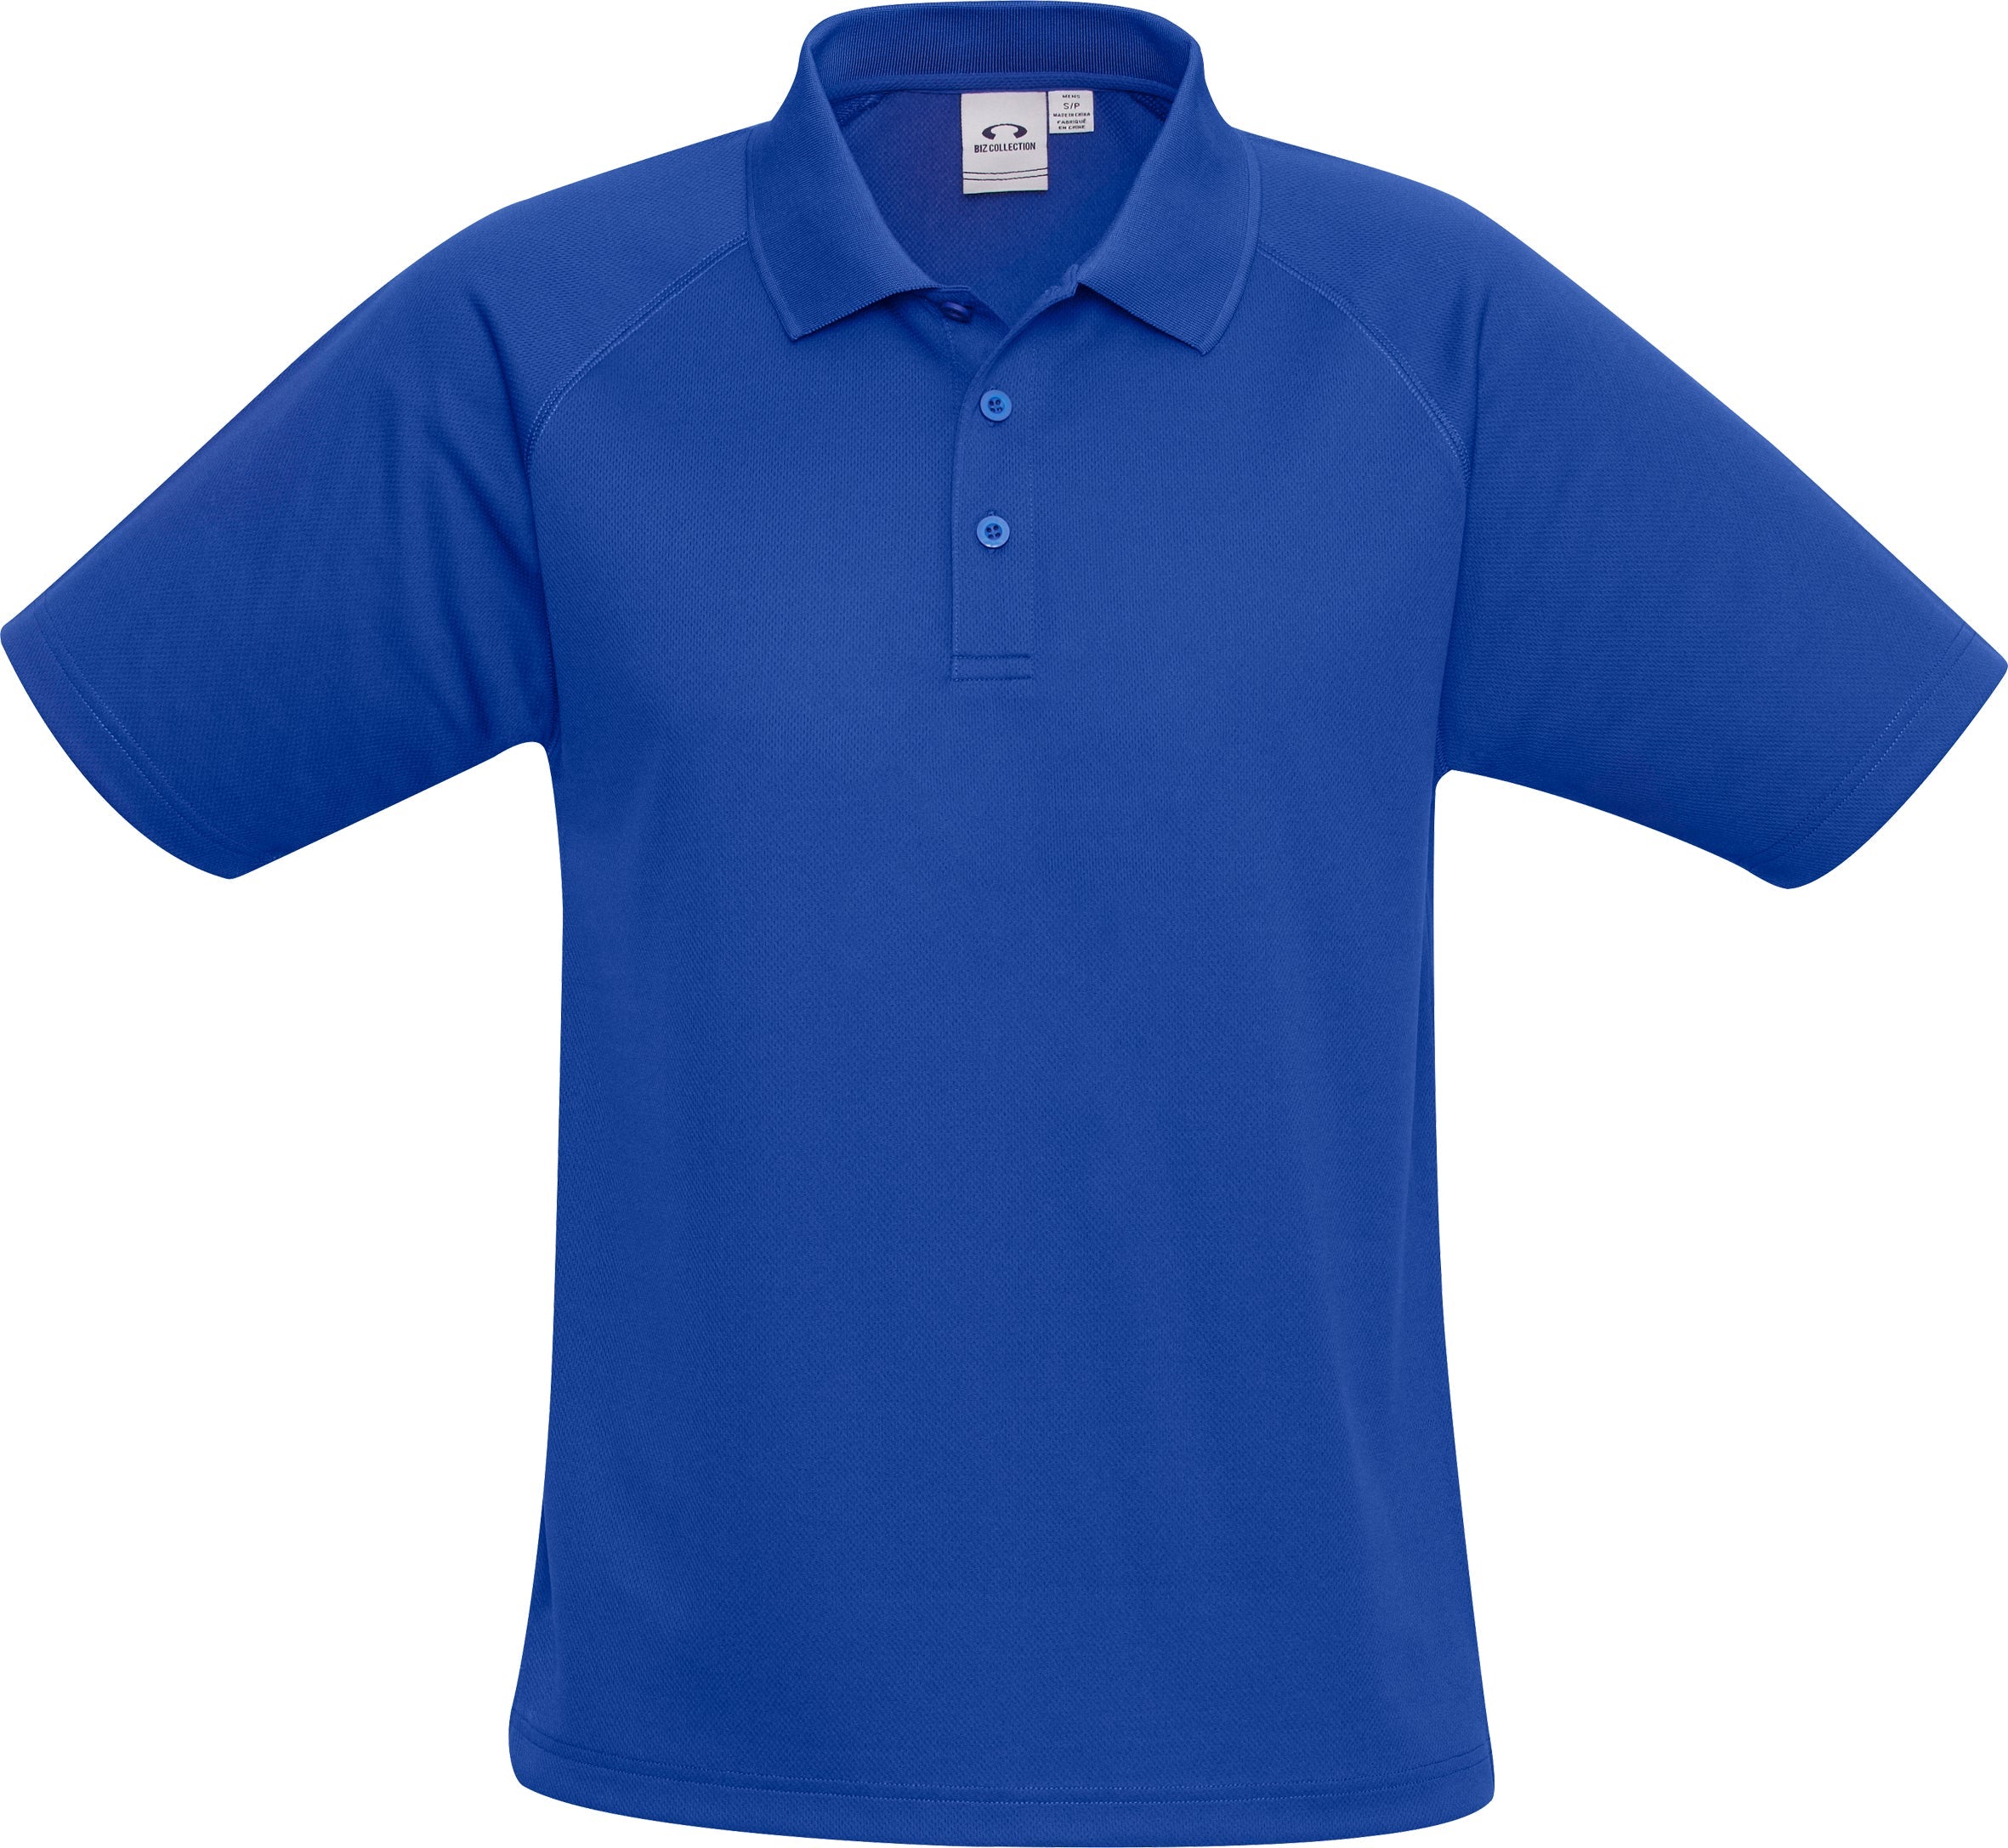 Mens Sprint Golf Shirt - White Only-L-Blue-BU